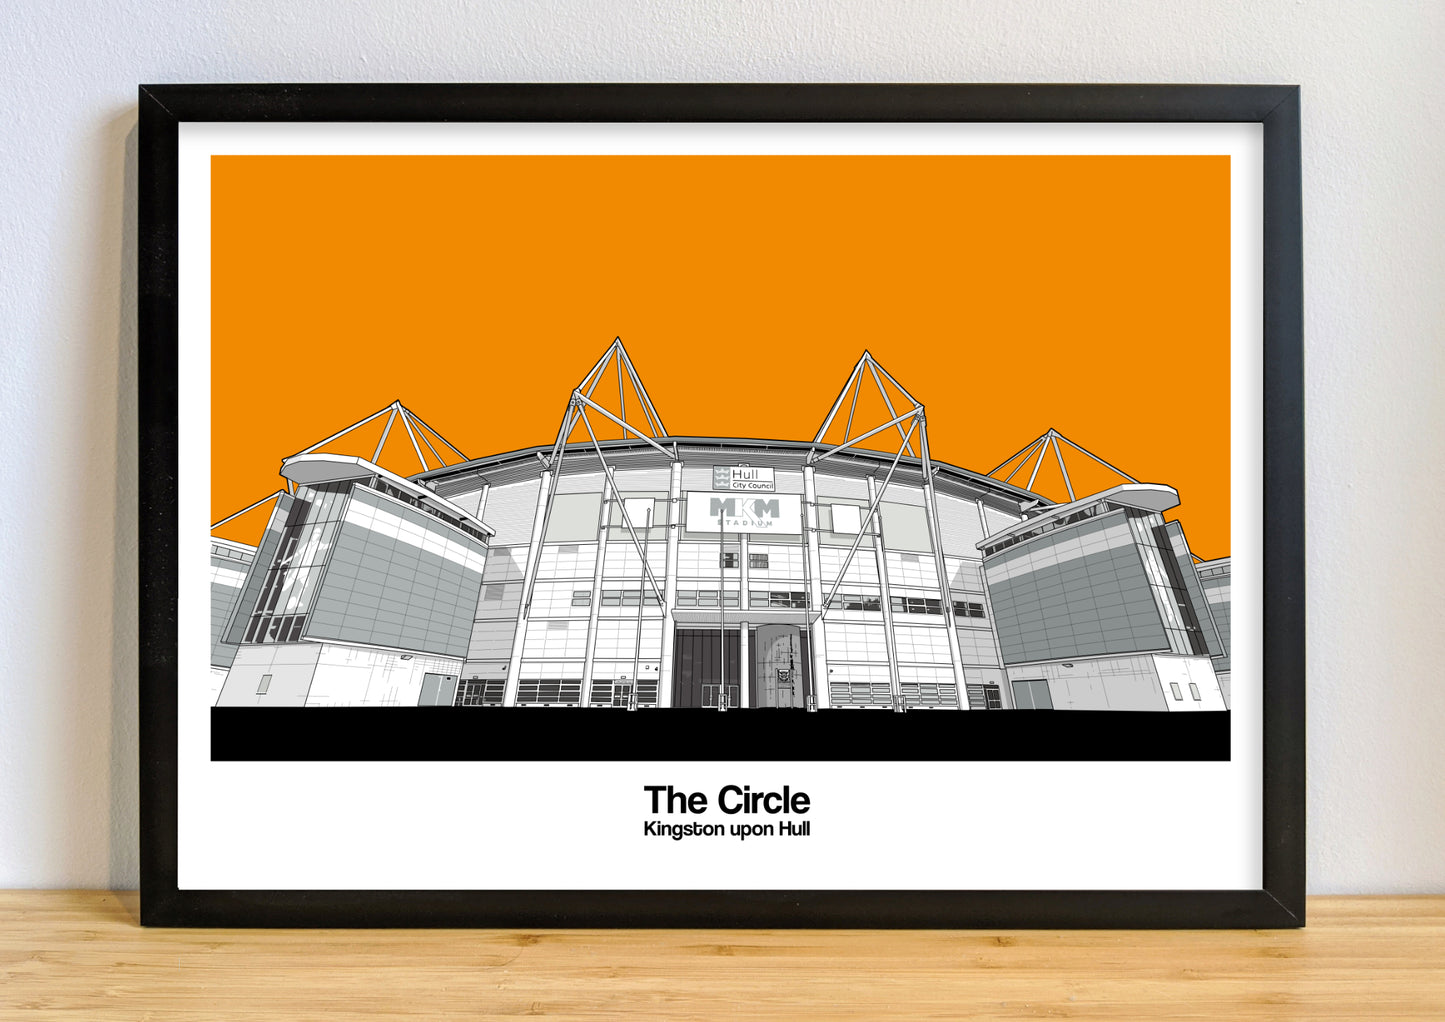 Hull City Art print of The Circle (MKM Stadium)